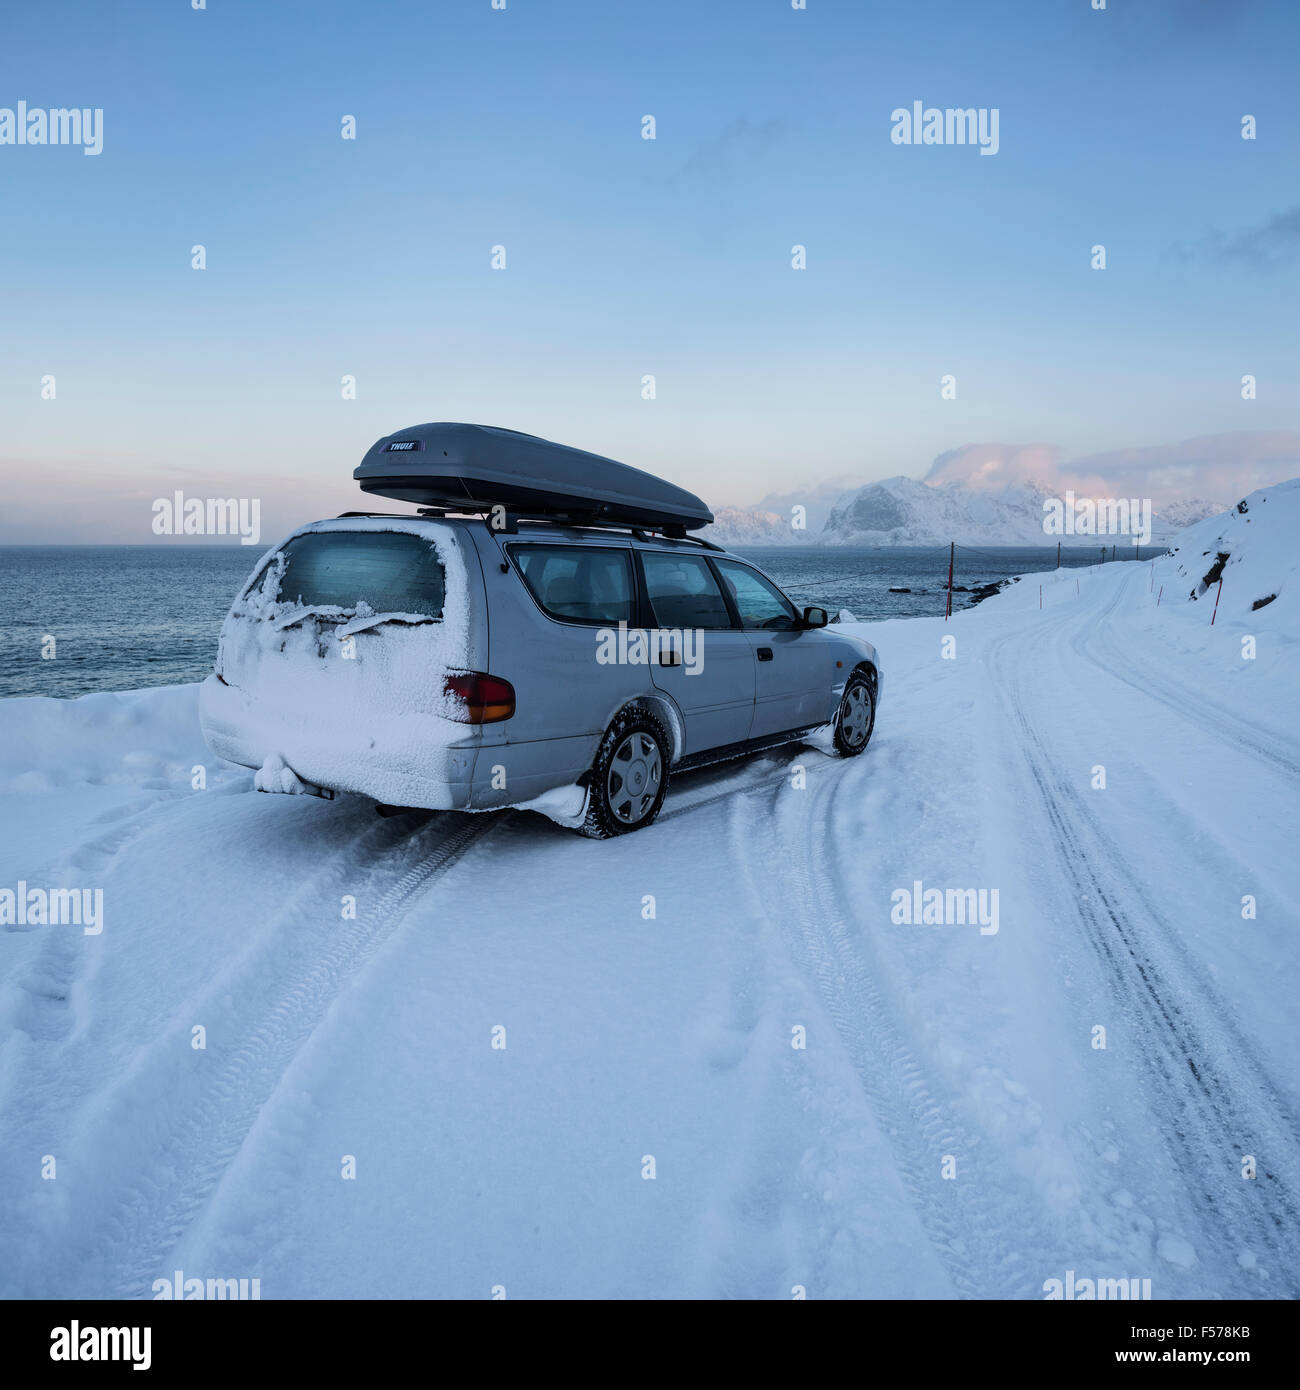 Car with ski rack parked on snowy road near ocean, Lofoten Islands, Norway Stock Photo